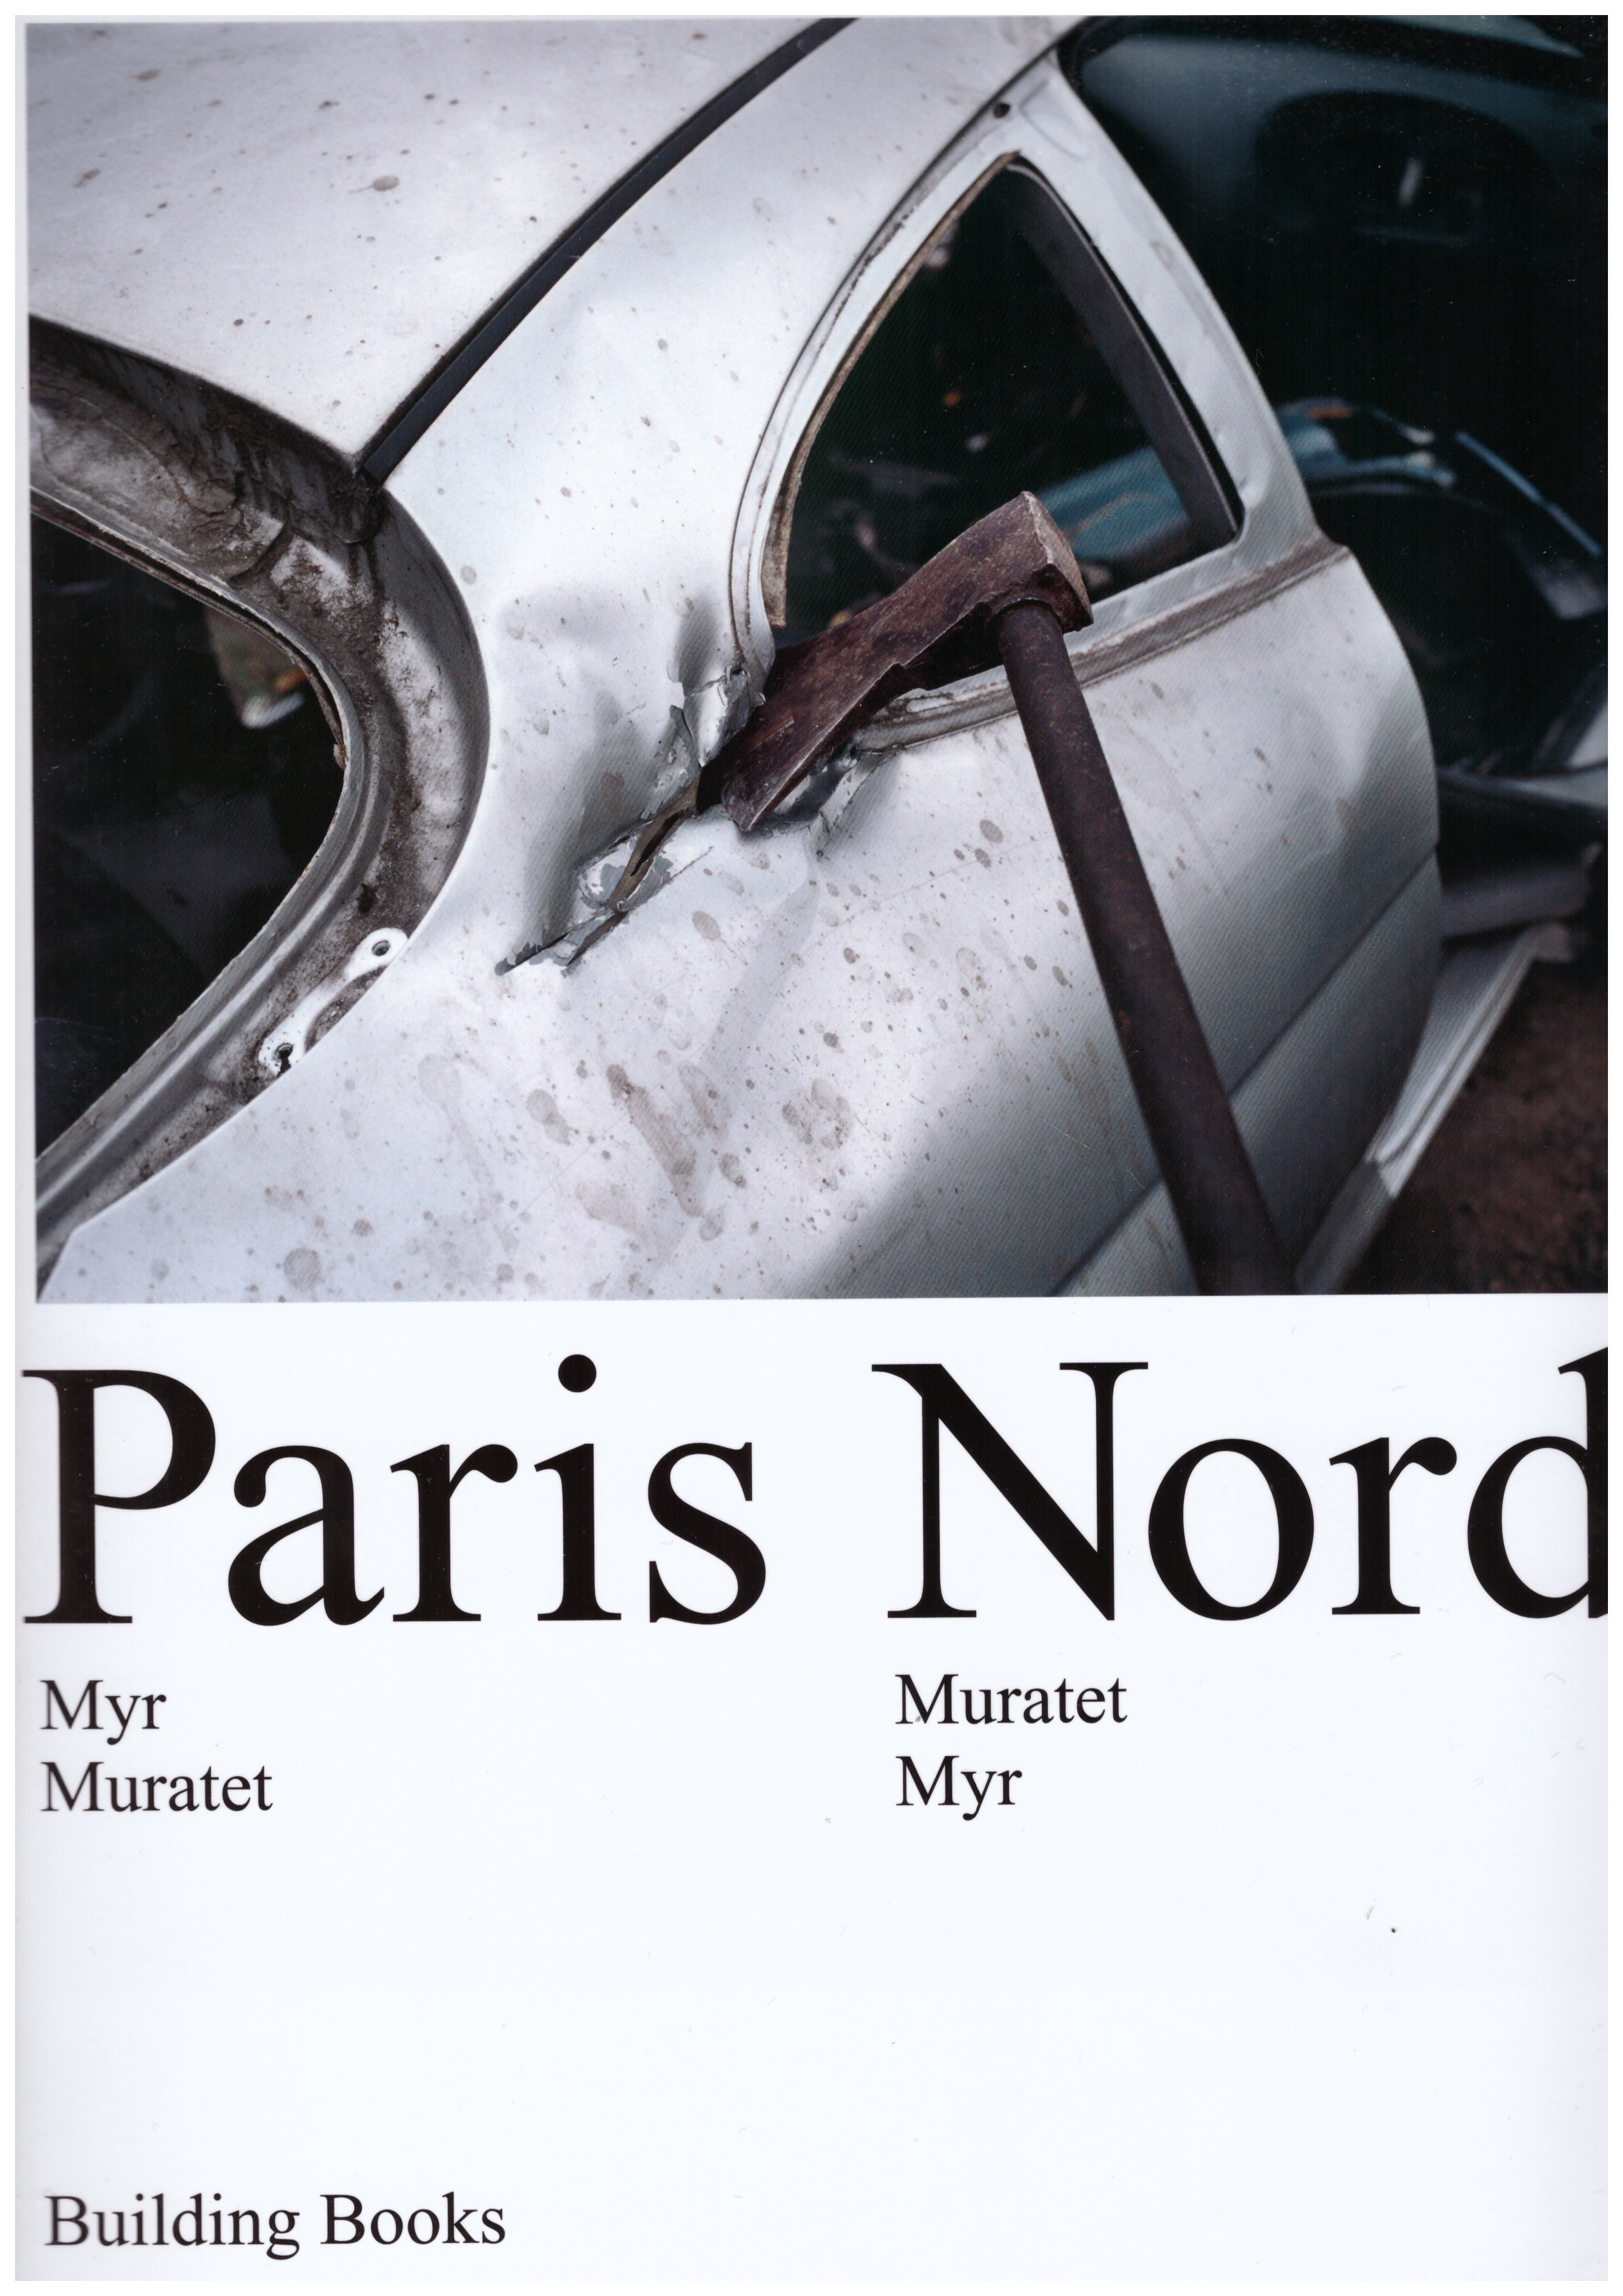 MYR, Muratet - Paris Nord